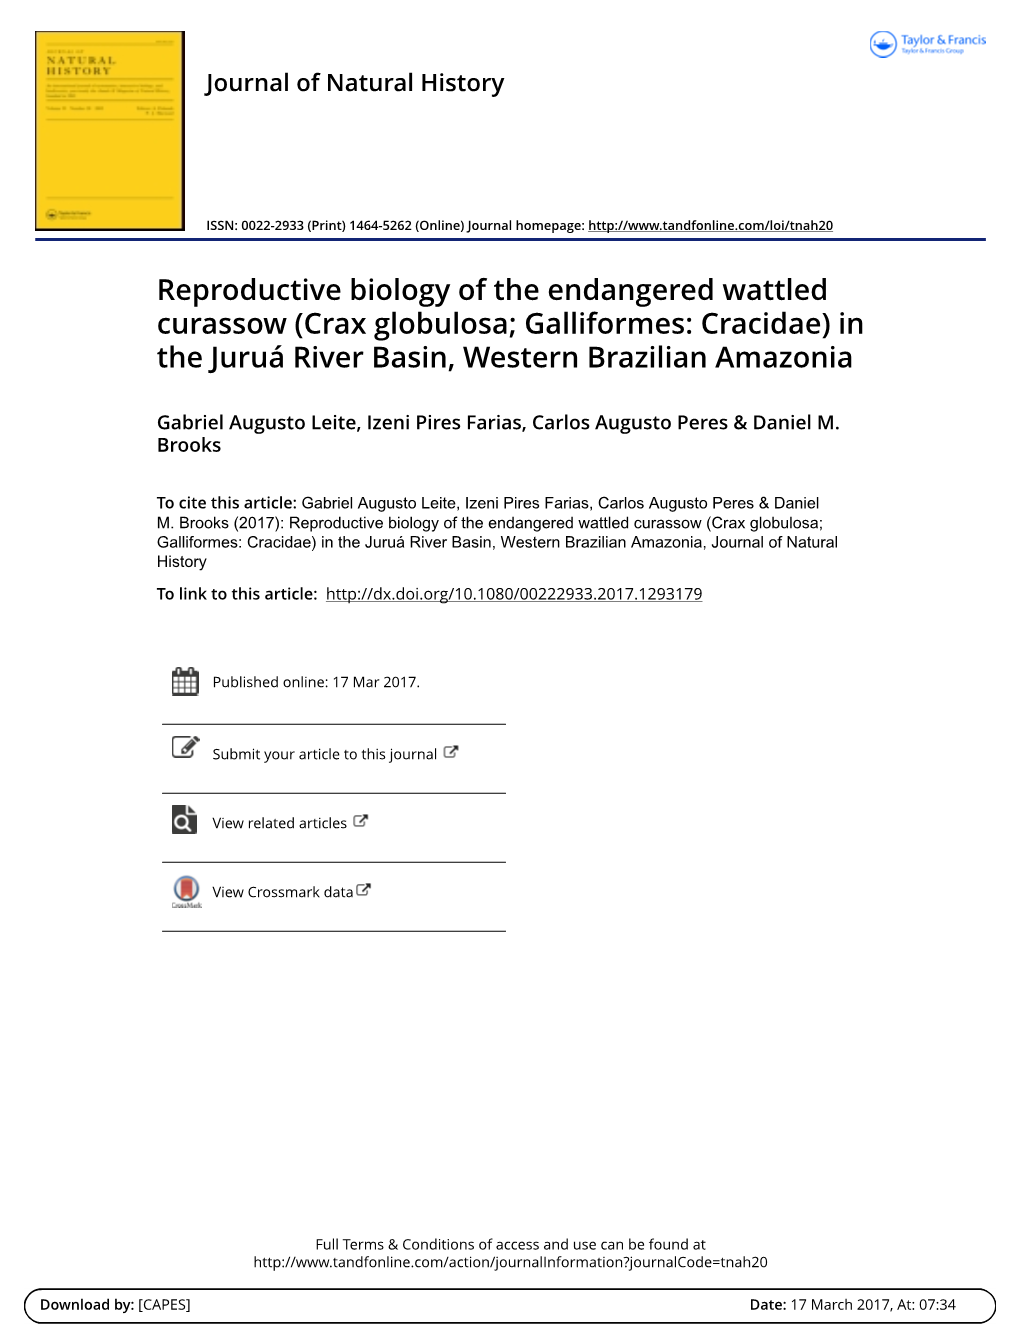 Reproductive Biology of the Endangered Wattled Curassow (Crax Globulosa; Galliformes: Cracidae) in the Juruá River Basin, Western Brazilian Amazonia